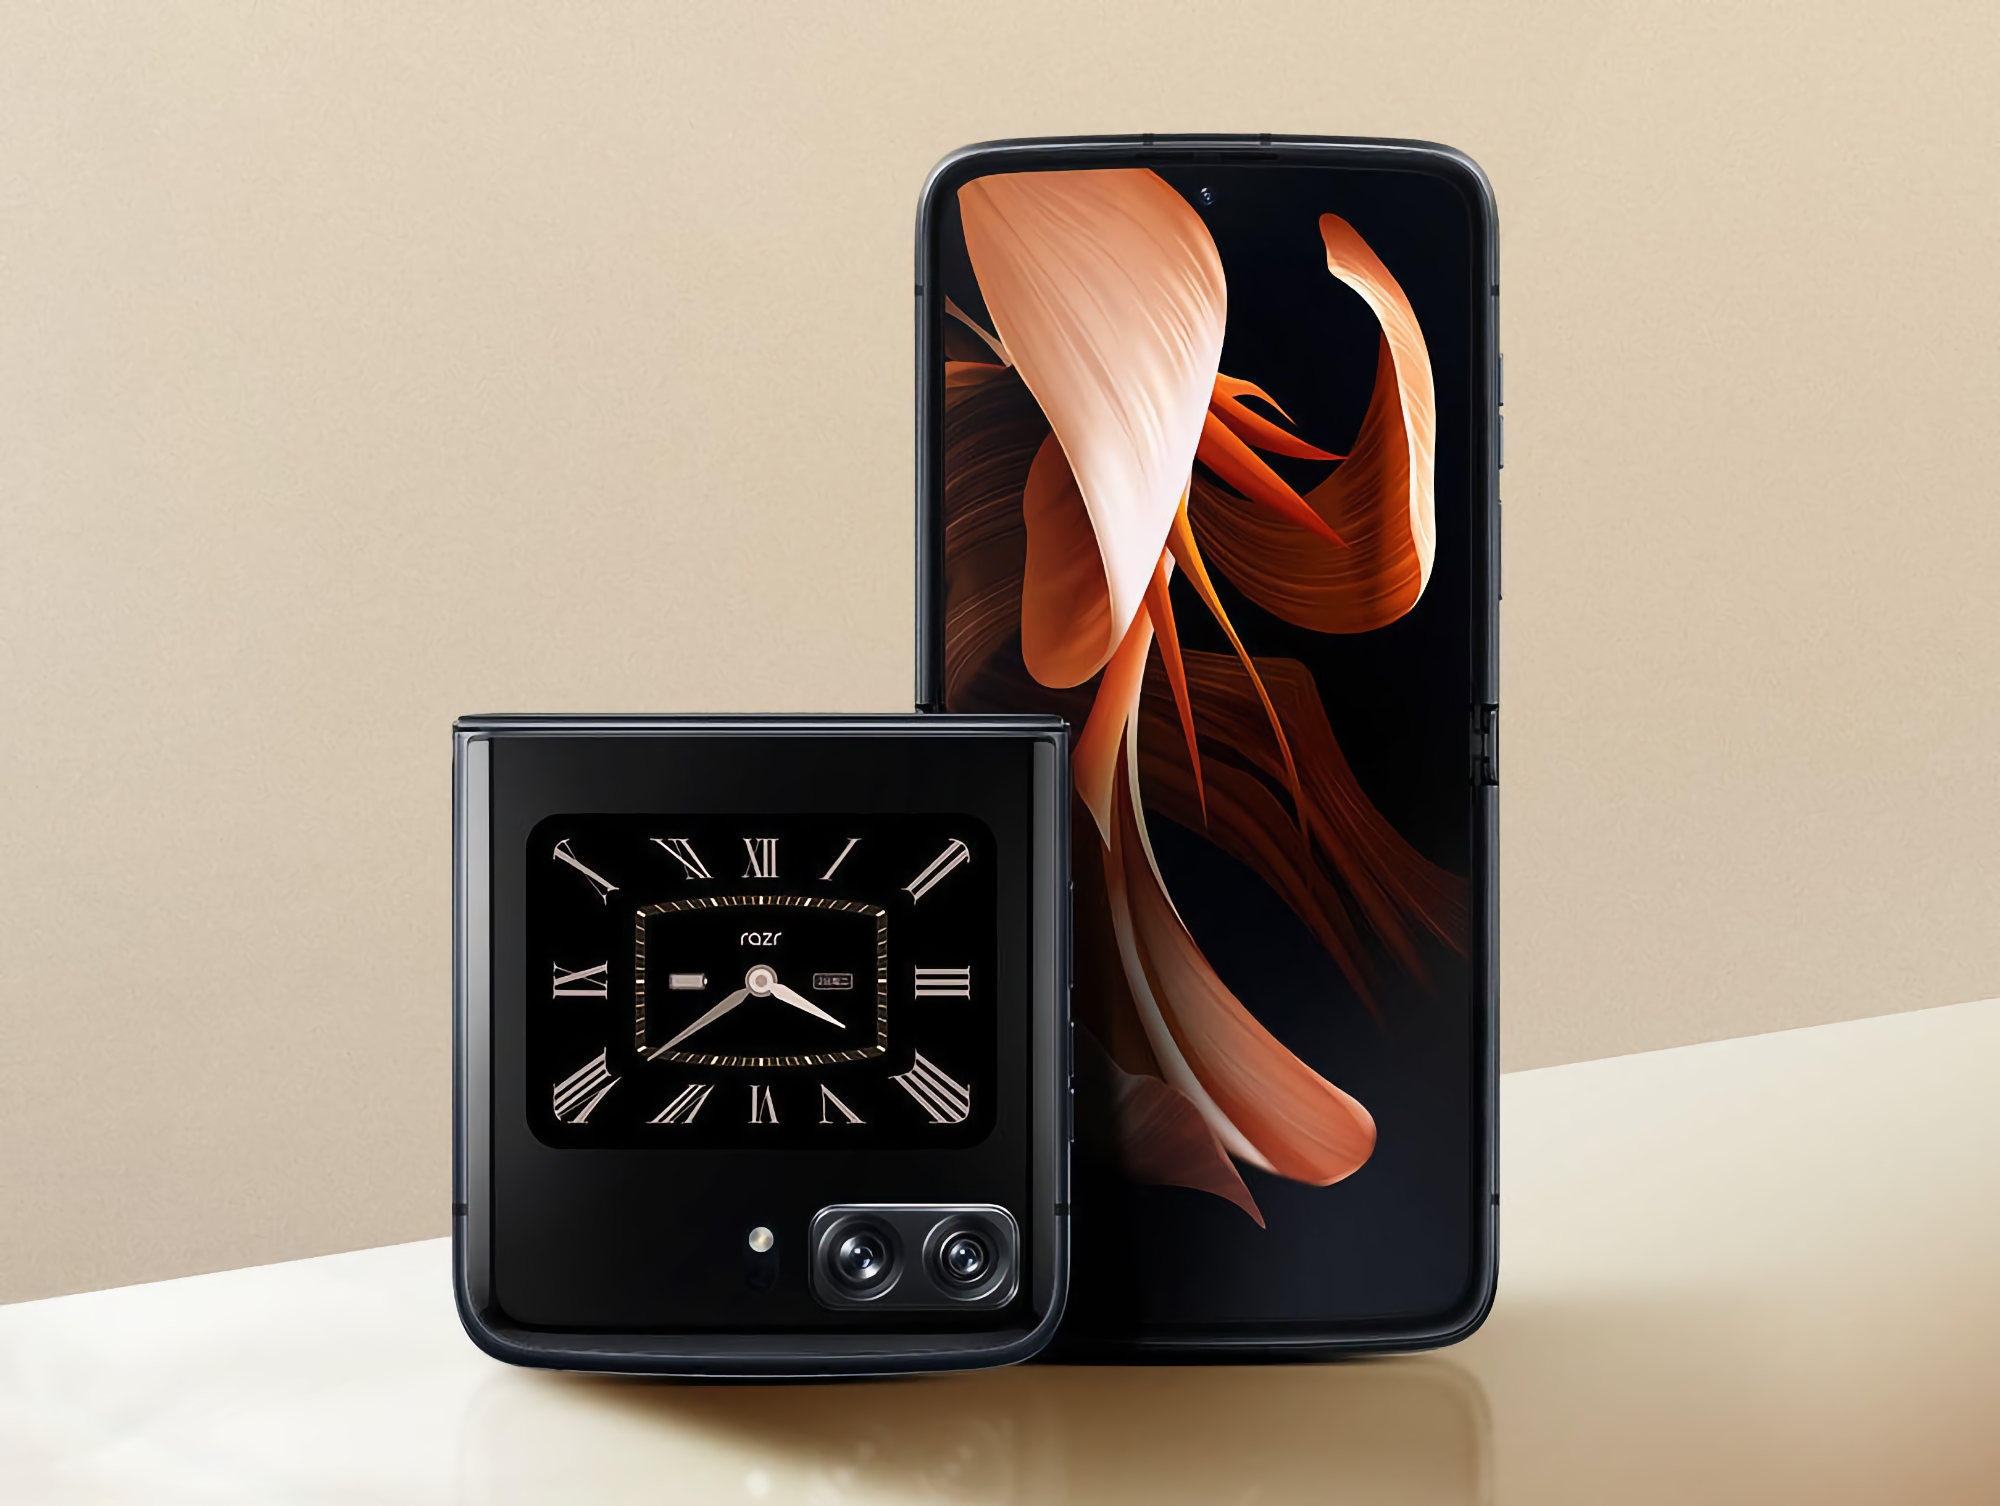 Konkurent Galaxy Flip 4: Motorola przedstawia klapkę Moto RAZR 2022 z ekranem 144 Hz, chipem Snapdragon 8+ Gen 1 i aparatem 50 MP